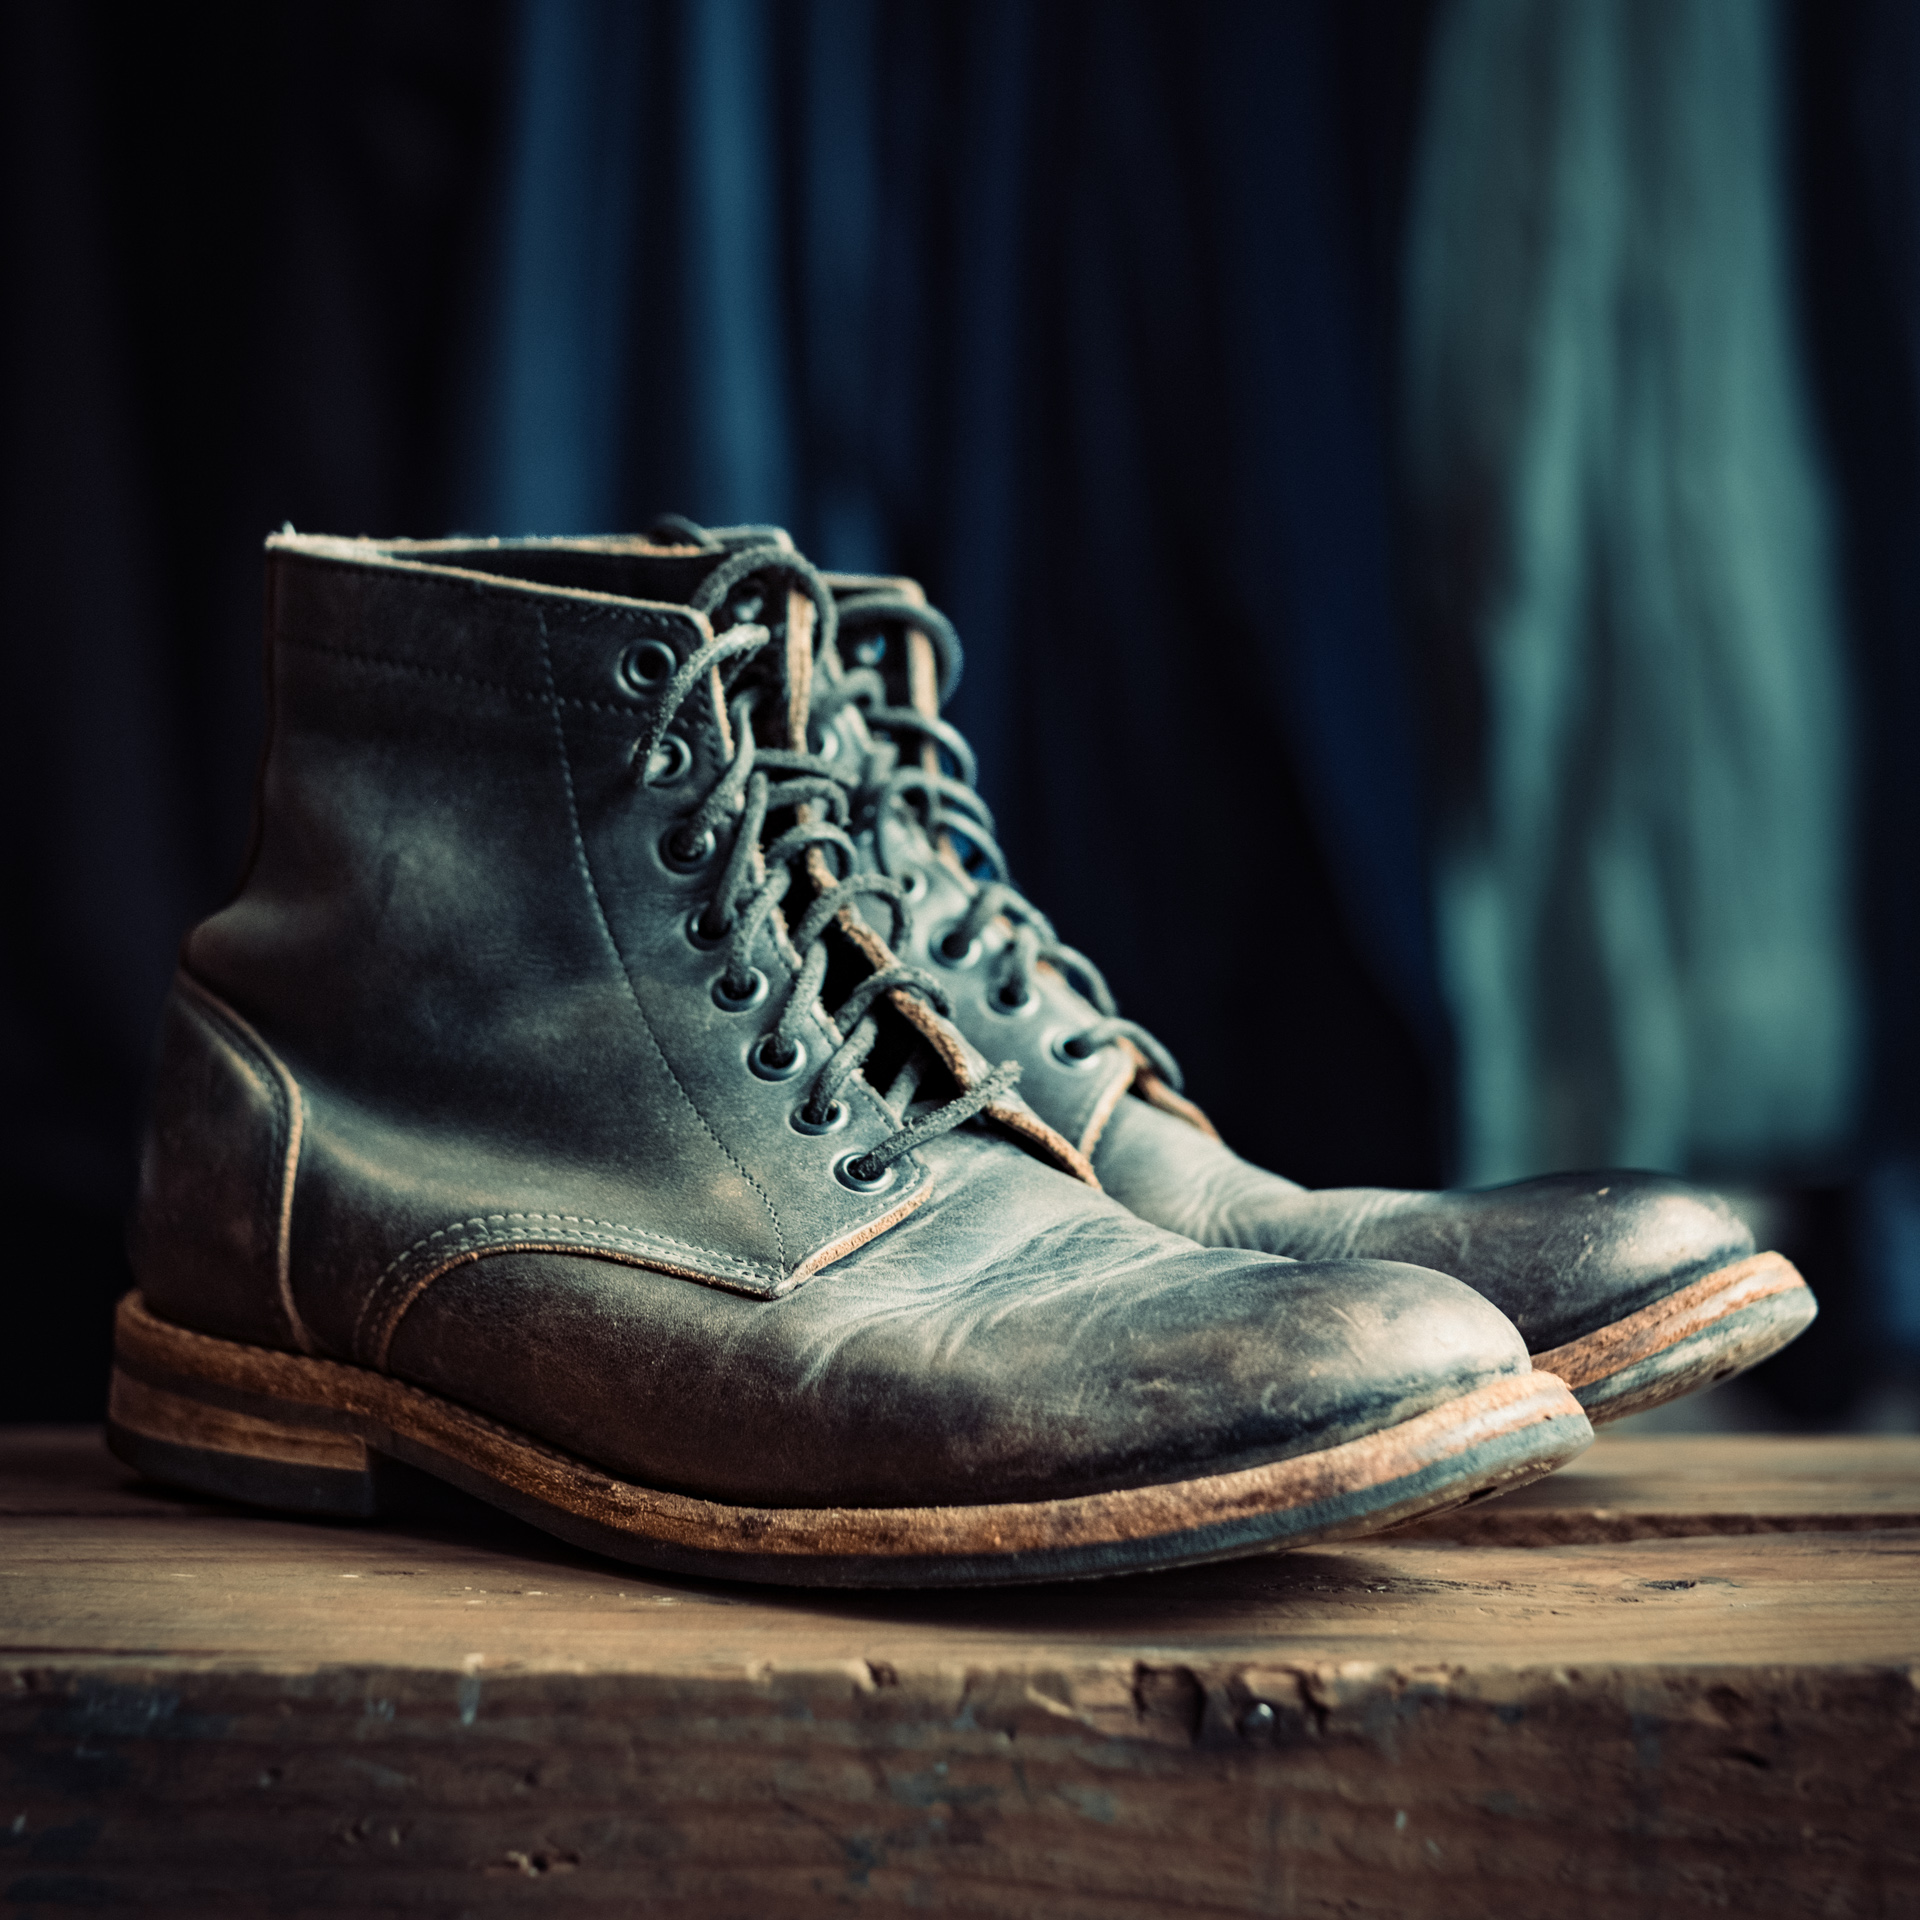 oak street bootmakers trench boot black chromexcel